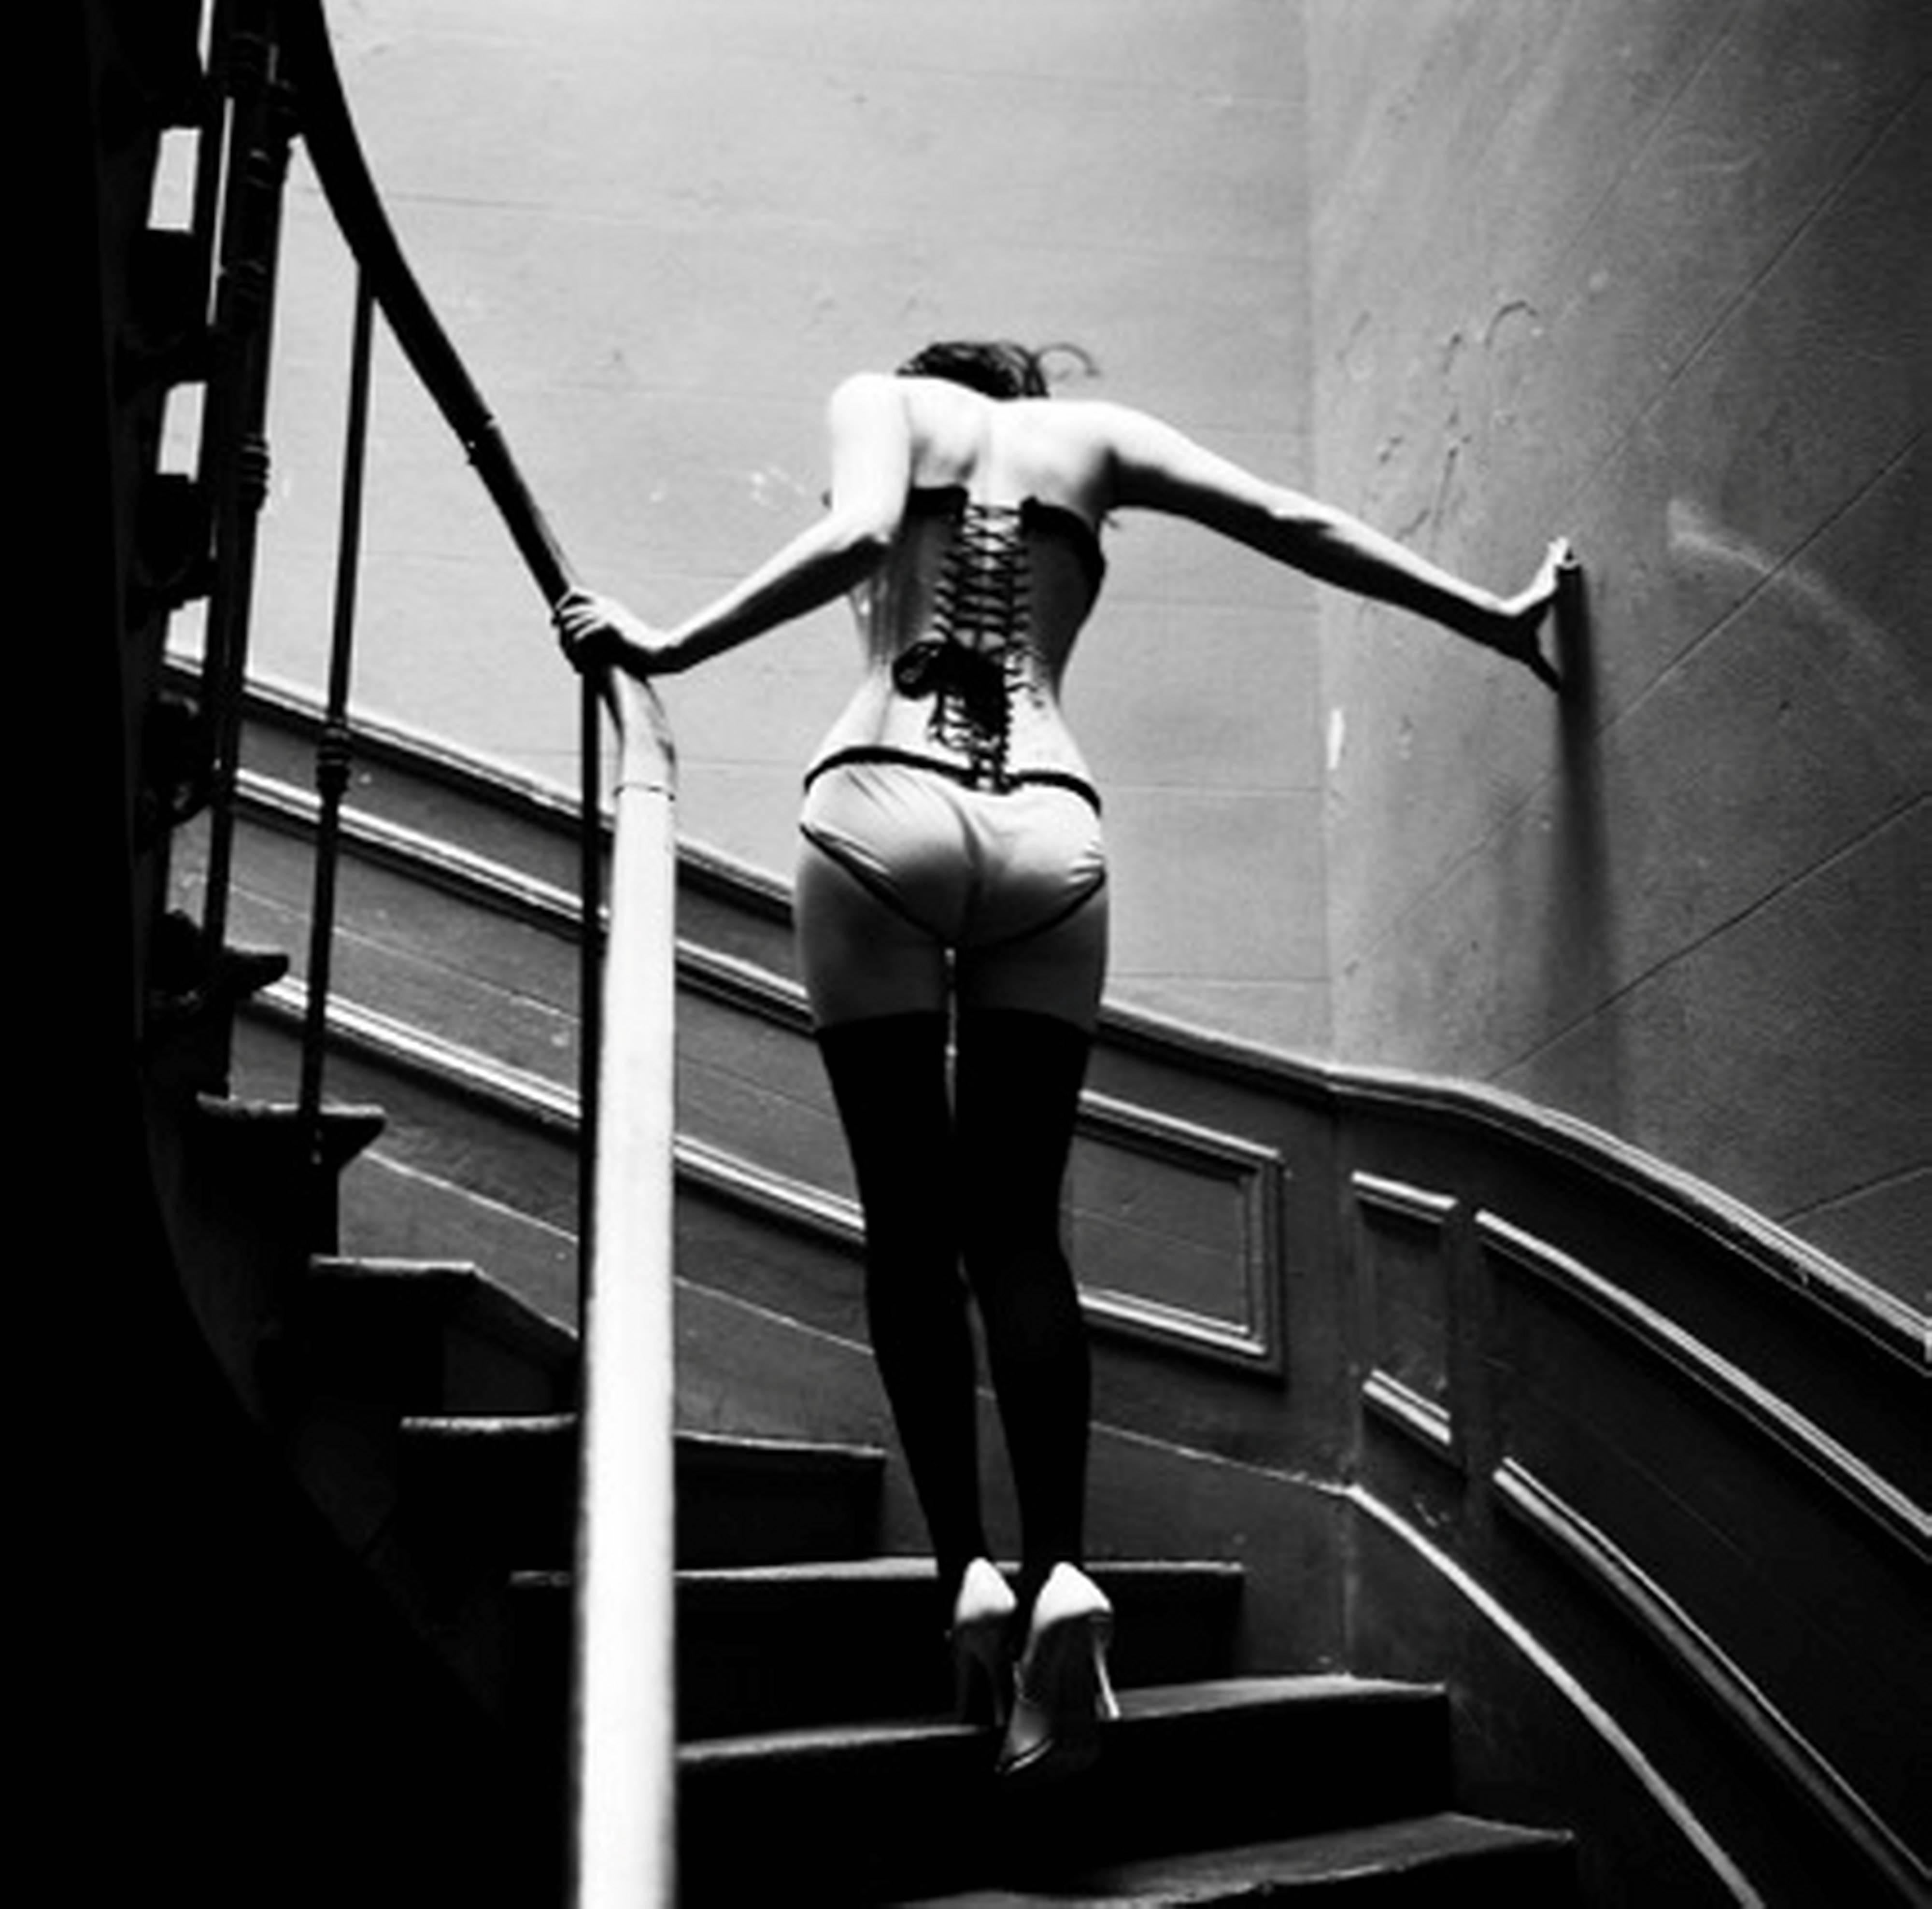 Ellen von Unwerth Black and White Photograph - Upstairs, Paris - Model in Lingerie walking up Stairs, fine art photography 1996